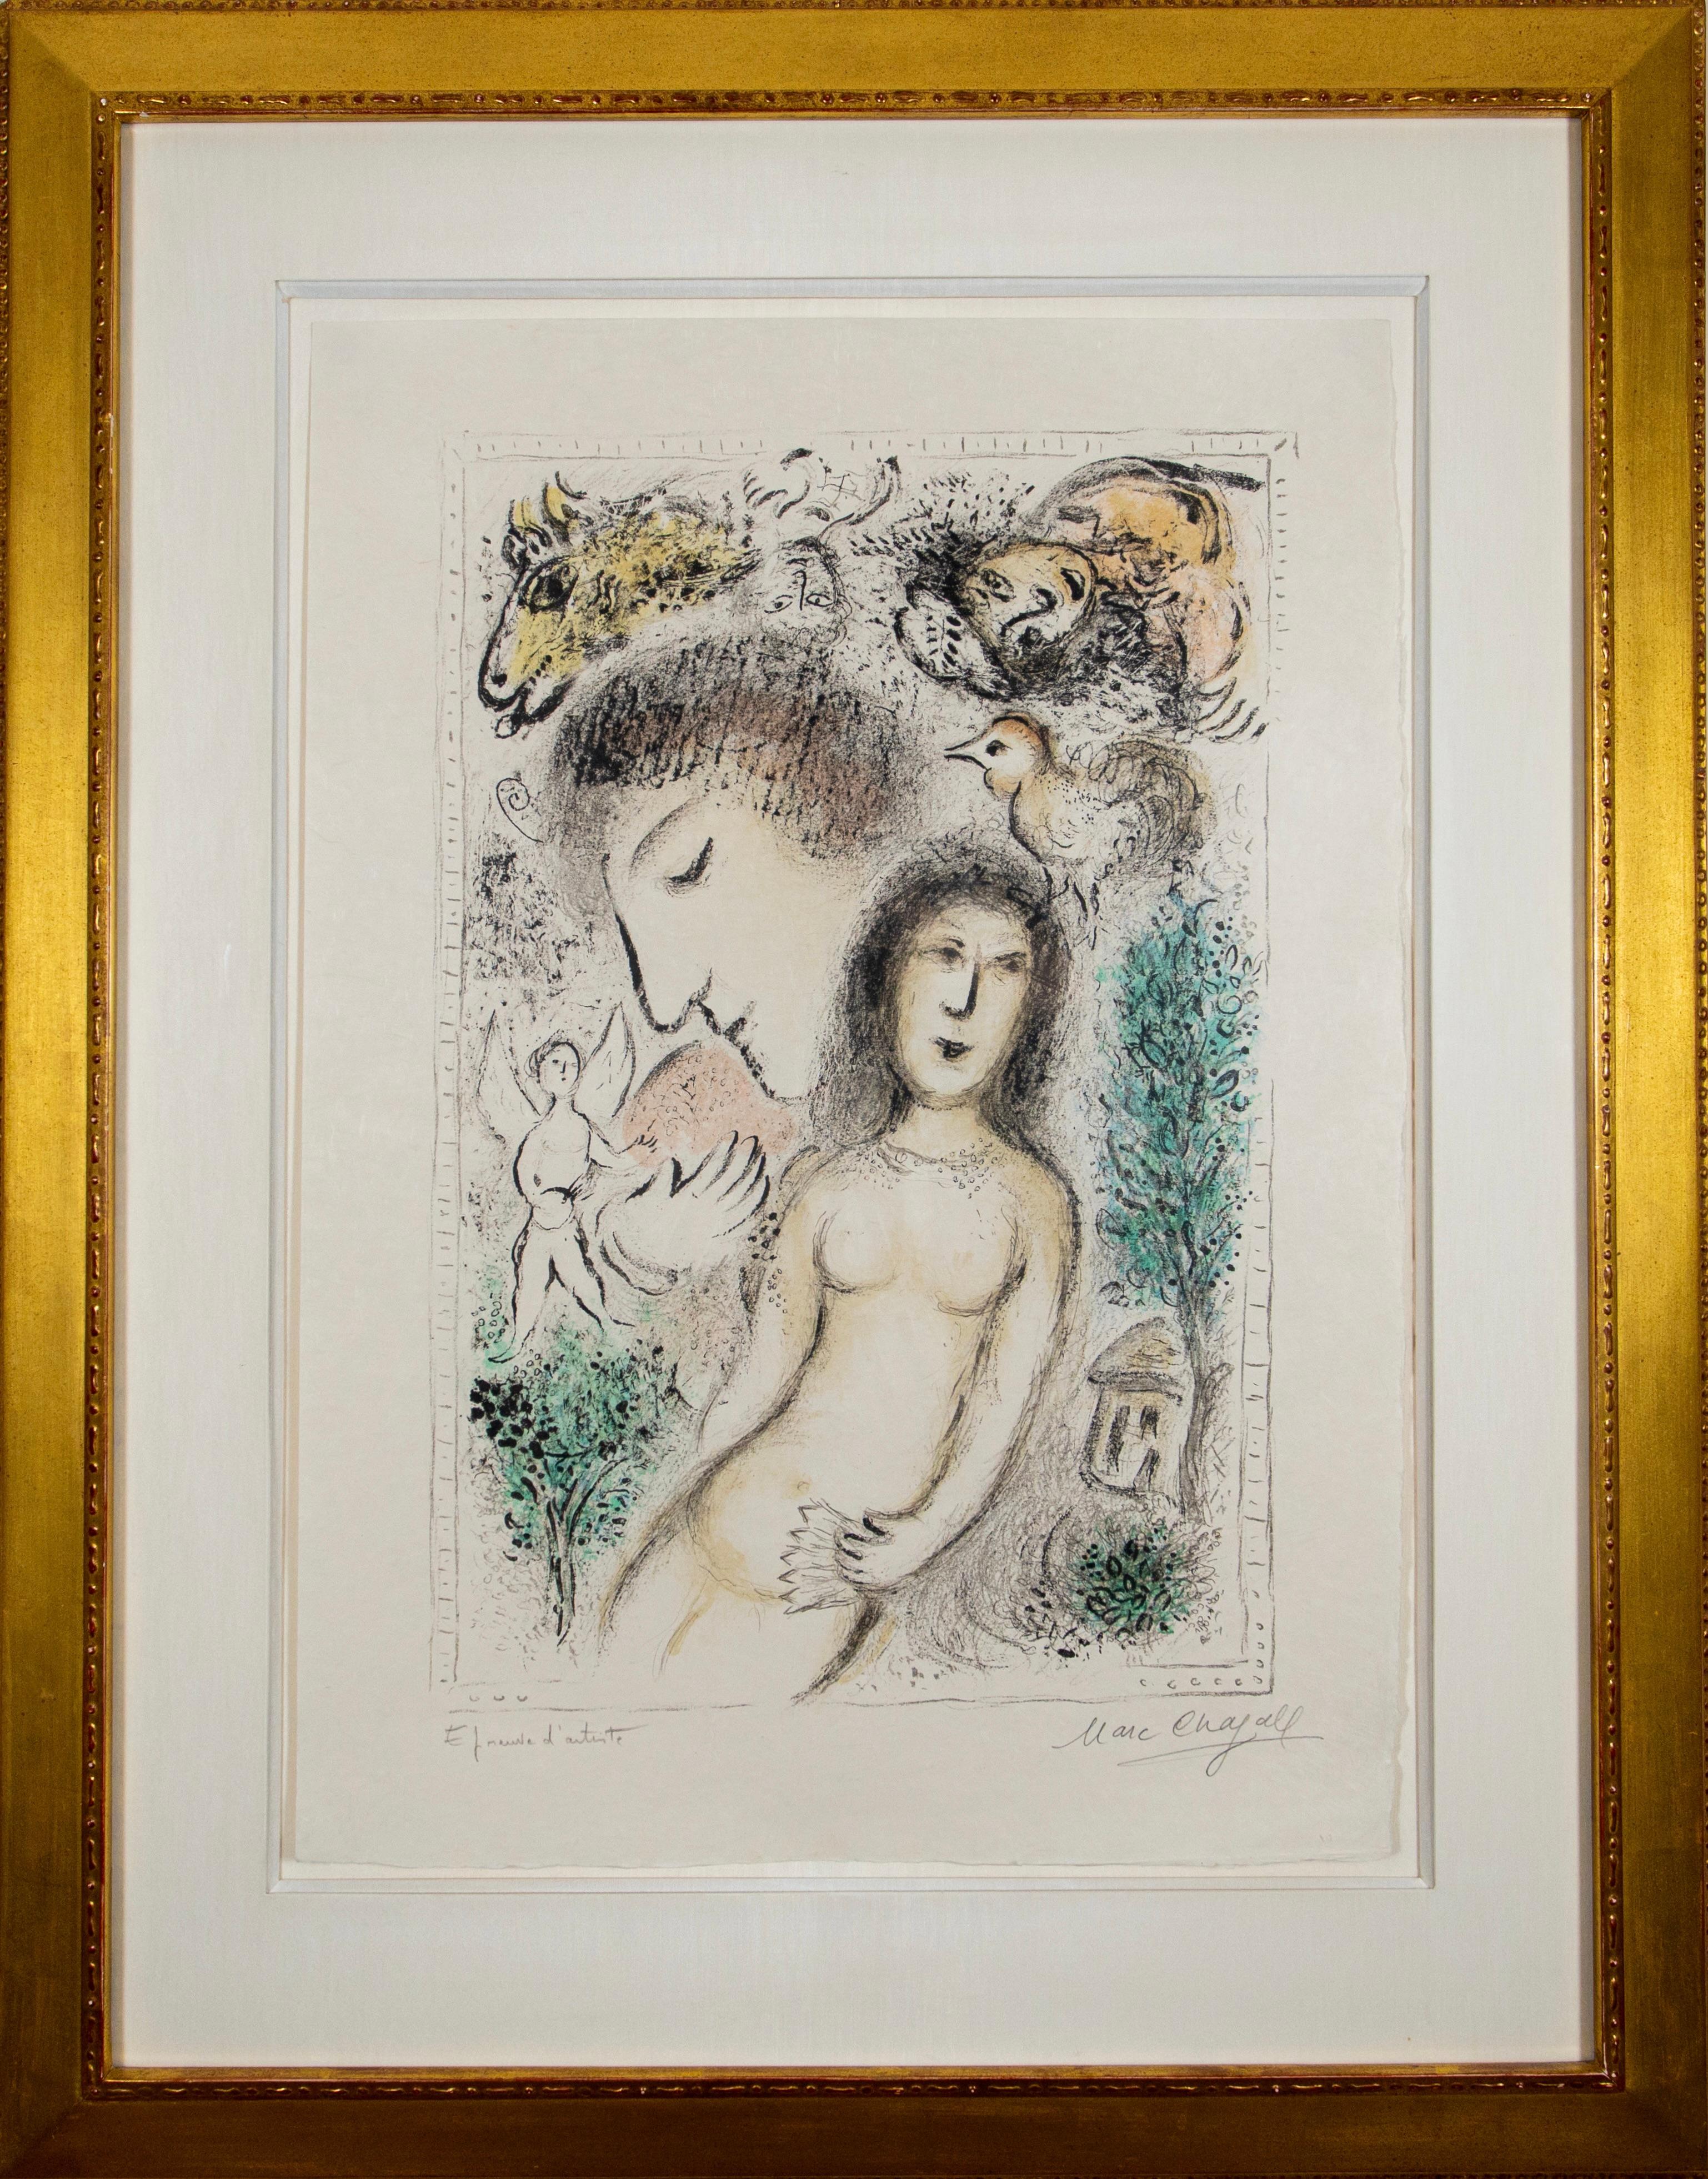 Le Nu The Nude - Farblithographie 1978 - gerahmt - signiert - Engel, Vogel – Print von Marc Chagall